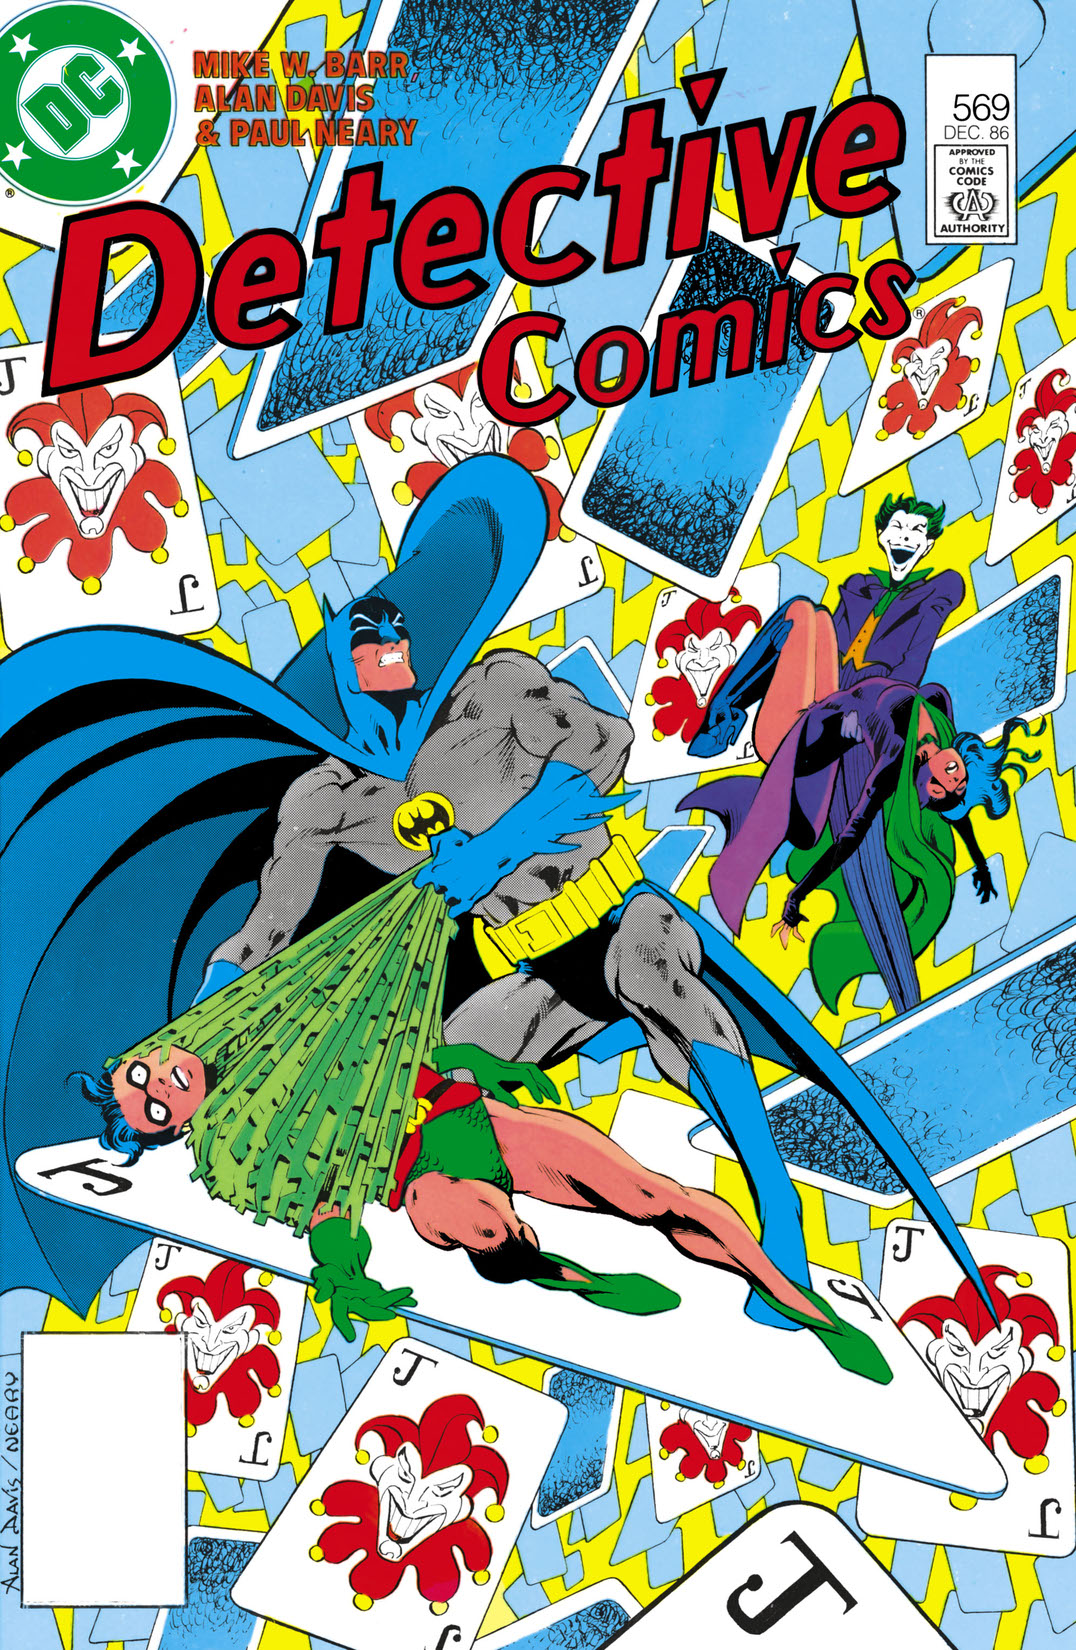 Detective Comics (1937-) #569 preview images